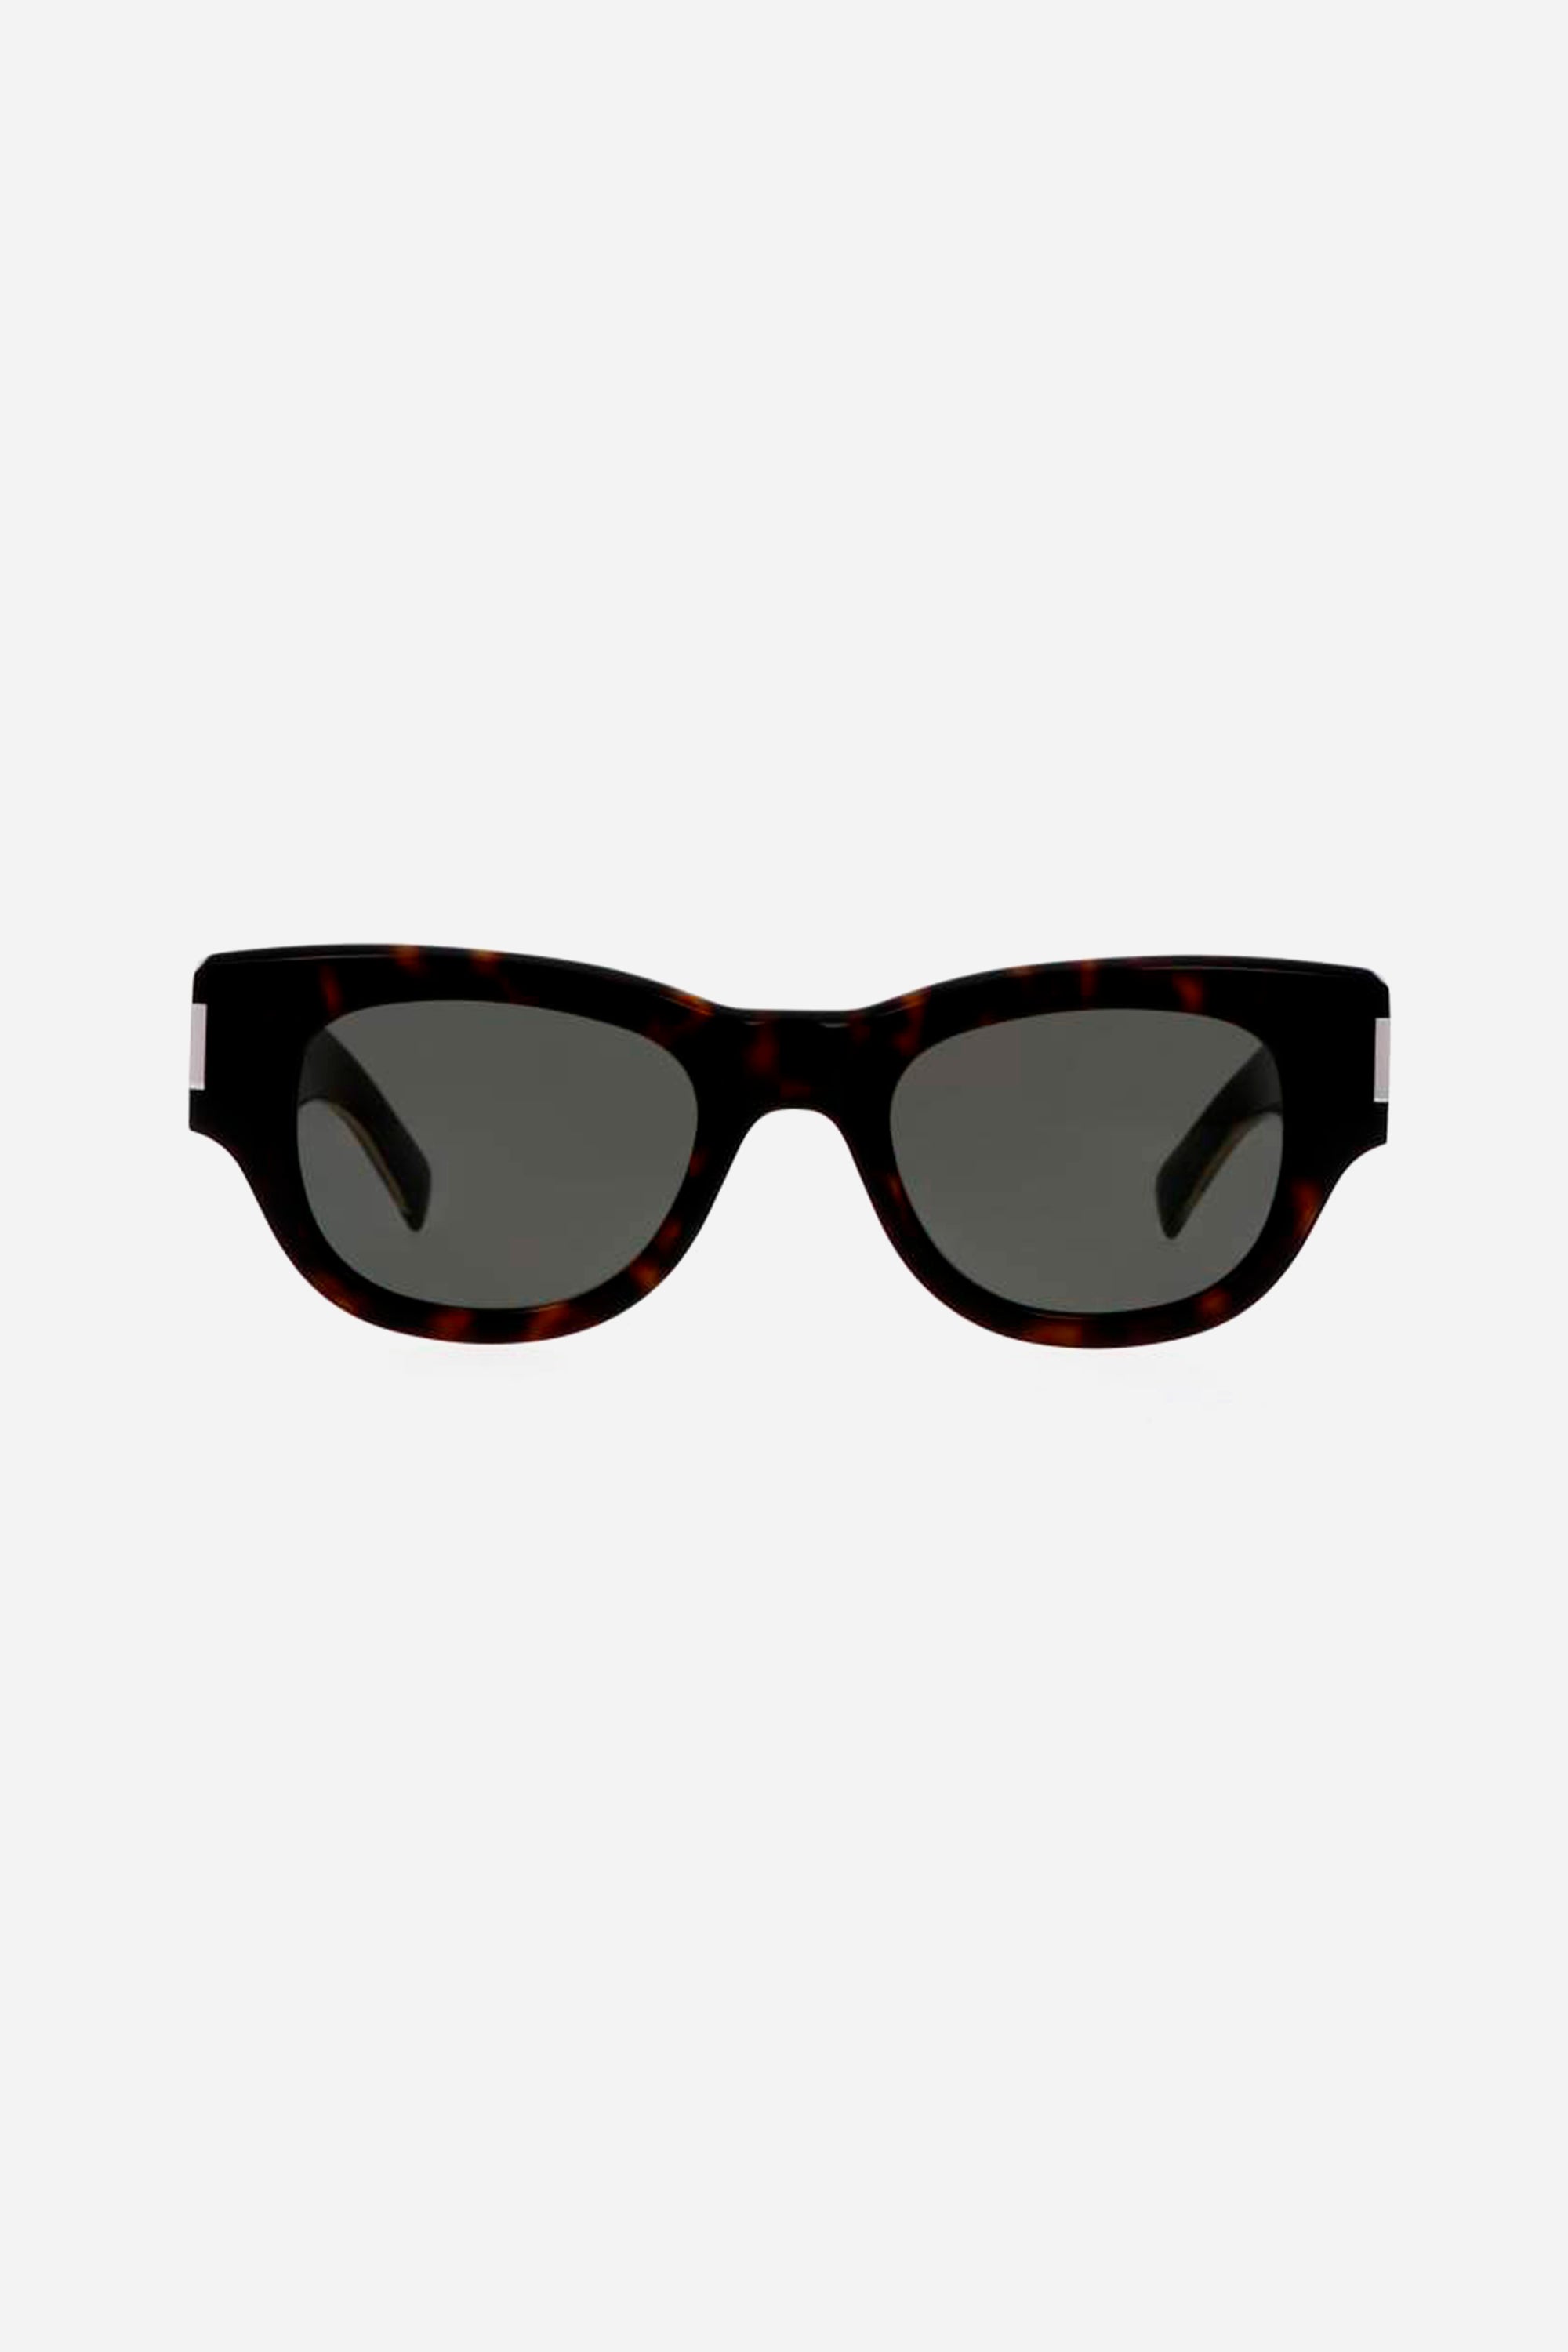 Saint Laurent bold almond havana sunglasses - Eyewear Club